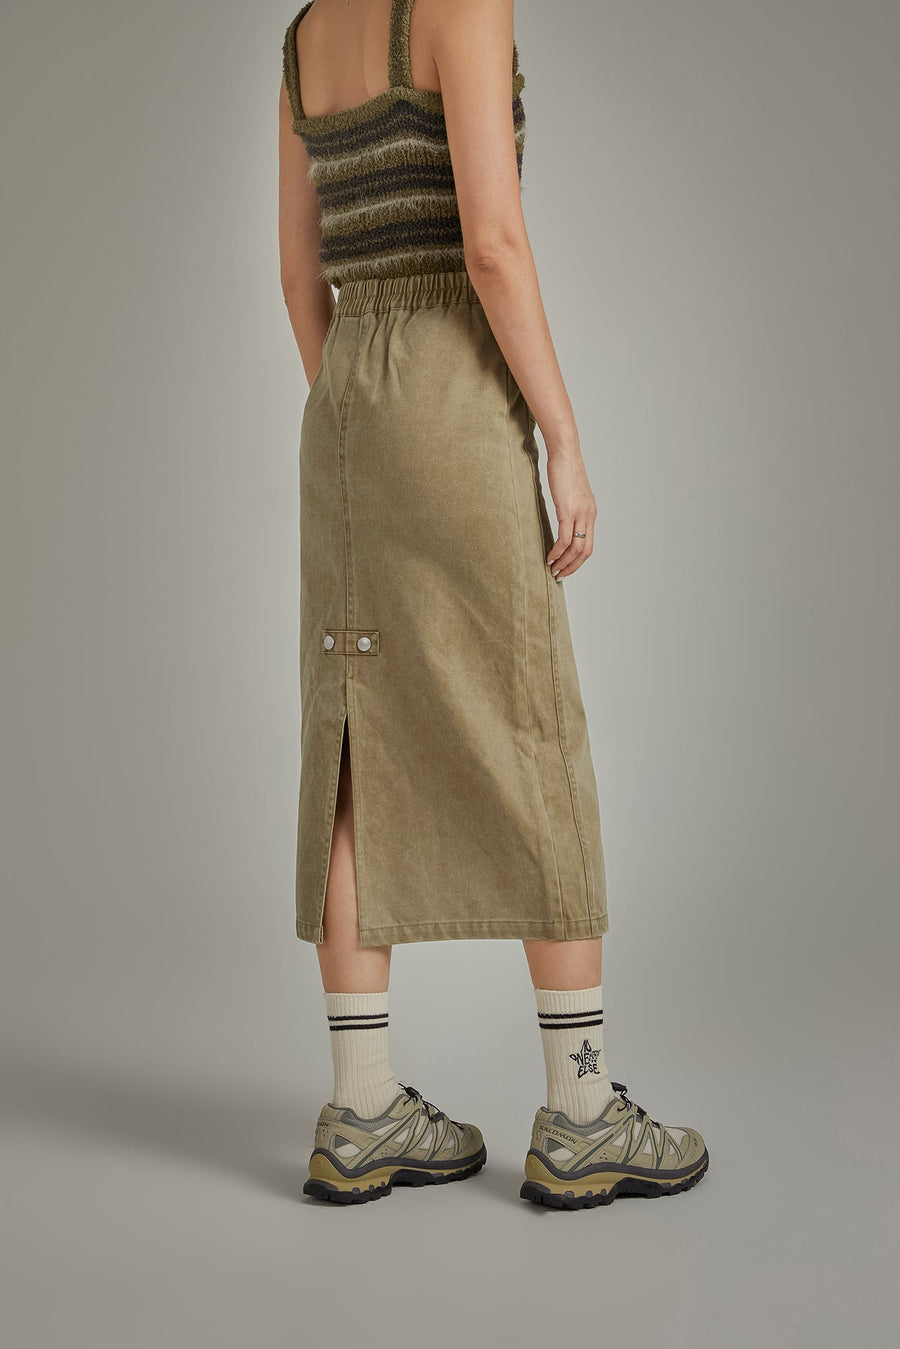 CHUU Back Elastic Slit Long Skirt